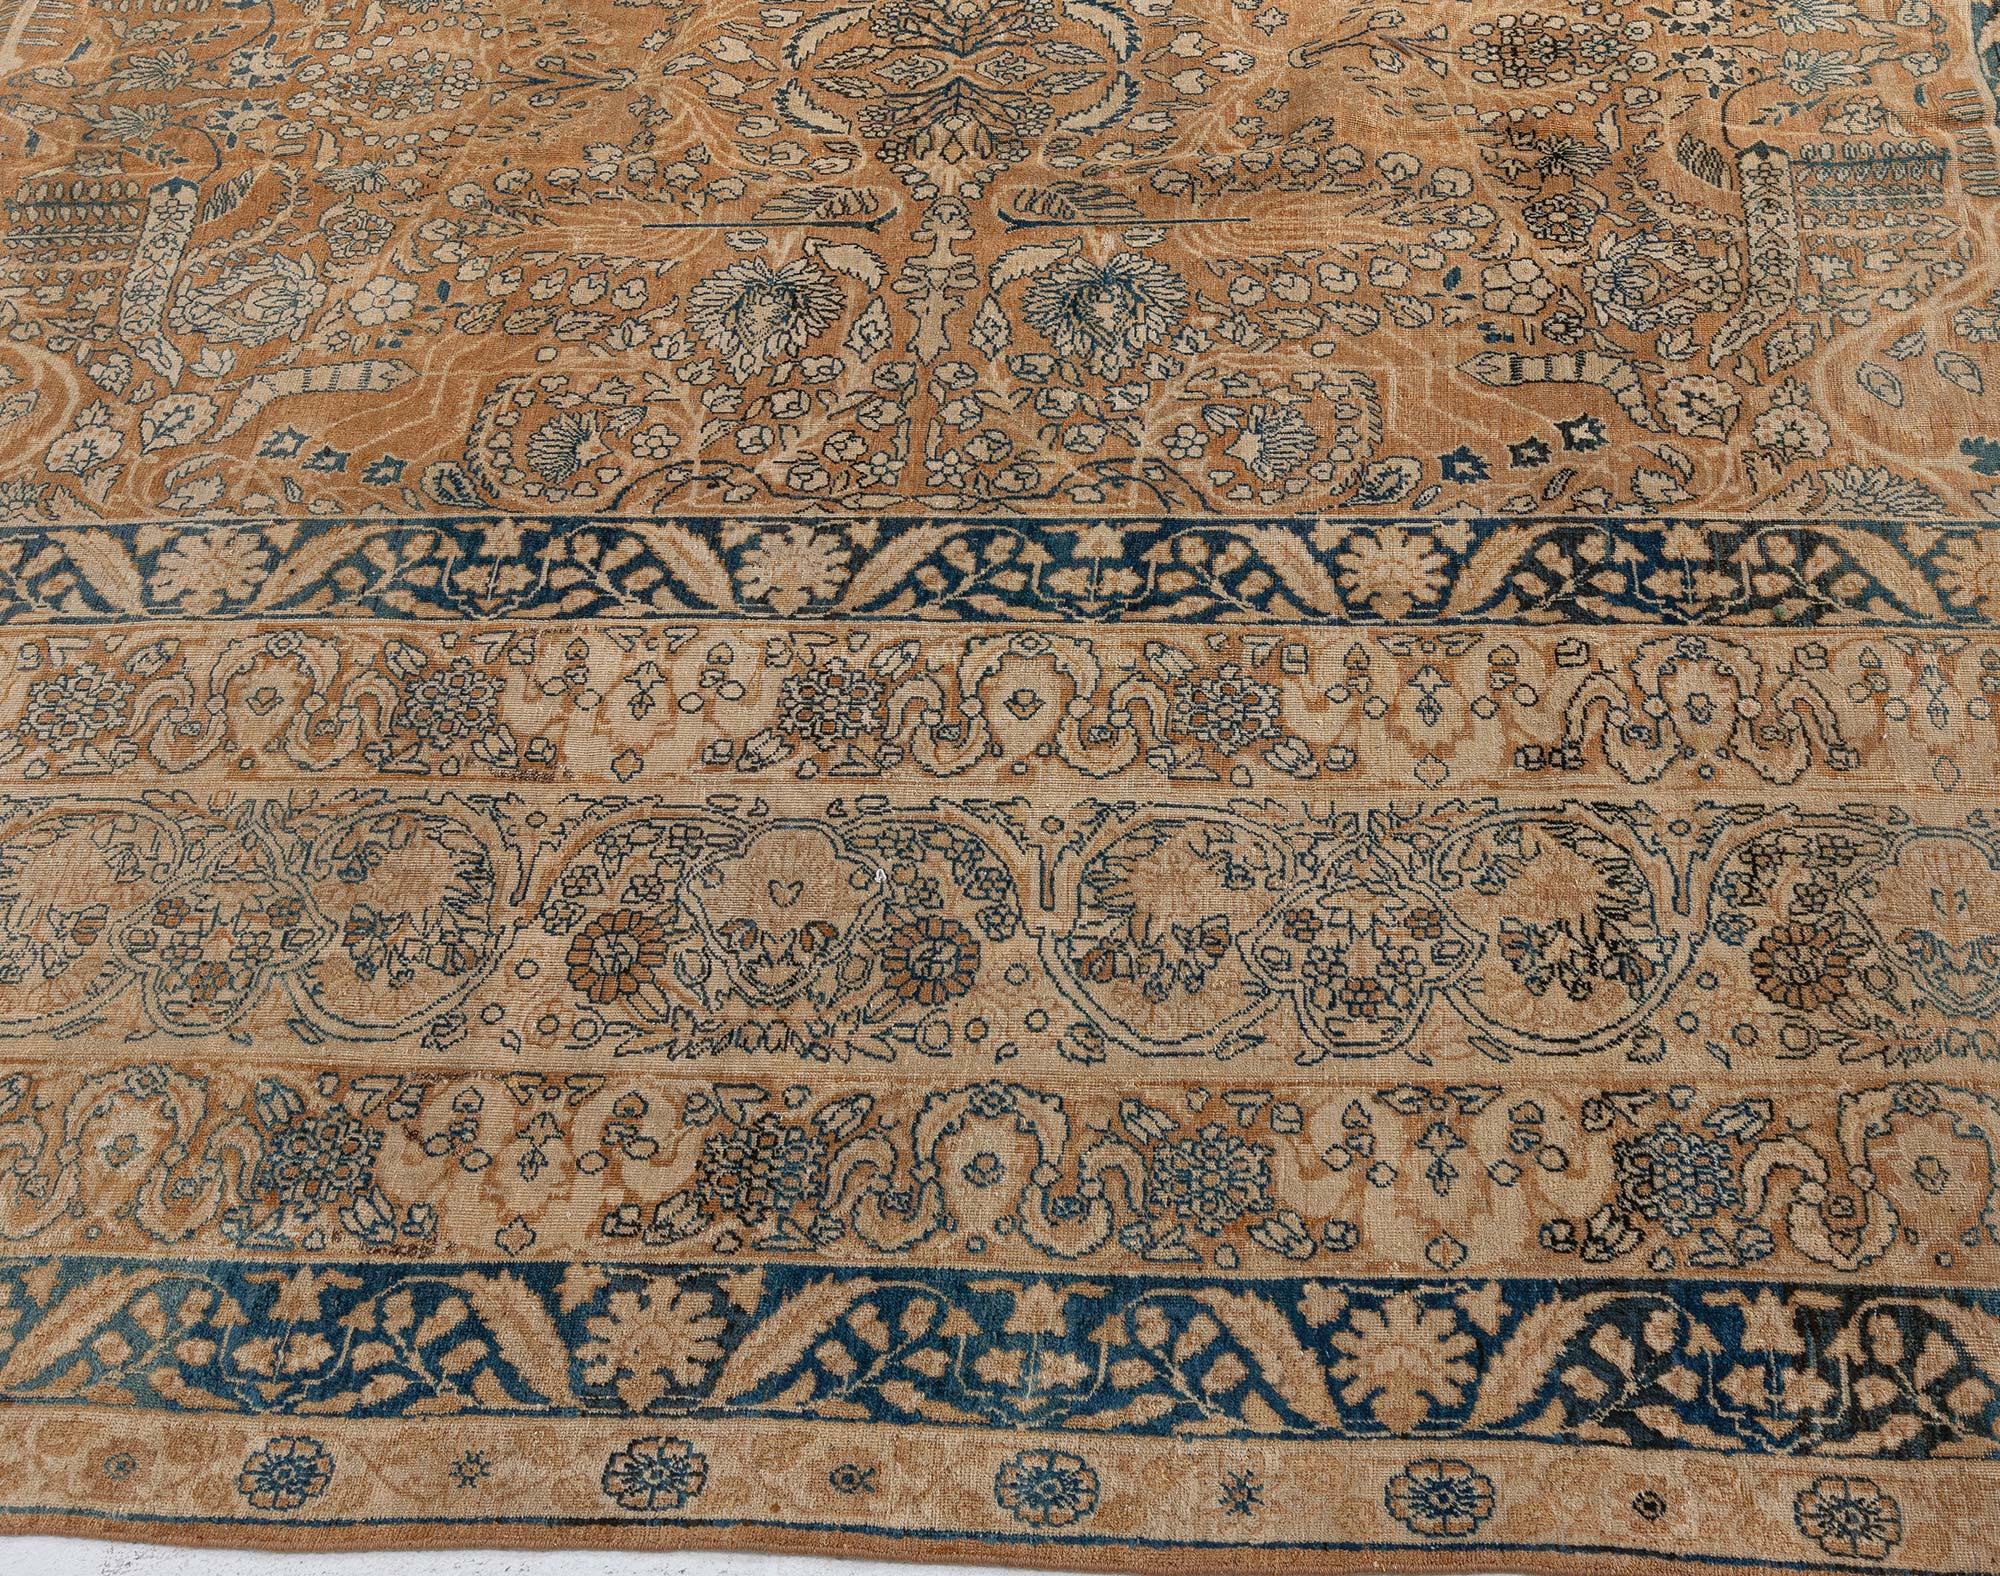 One-of-a-kind Vintage Persian Kirman handmade wool carpet
Size: 11'10